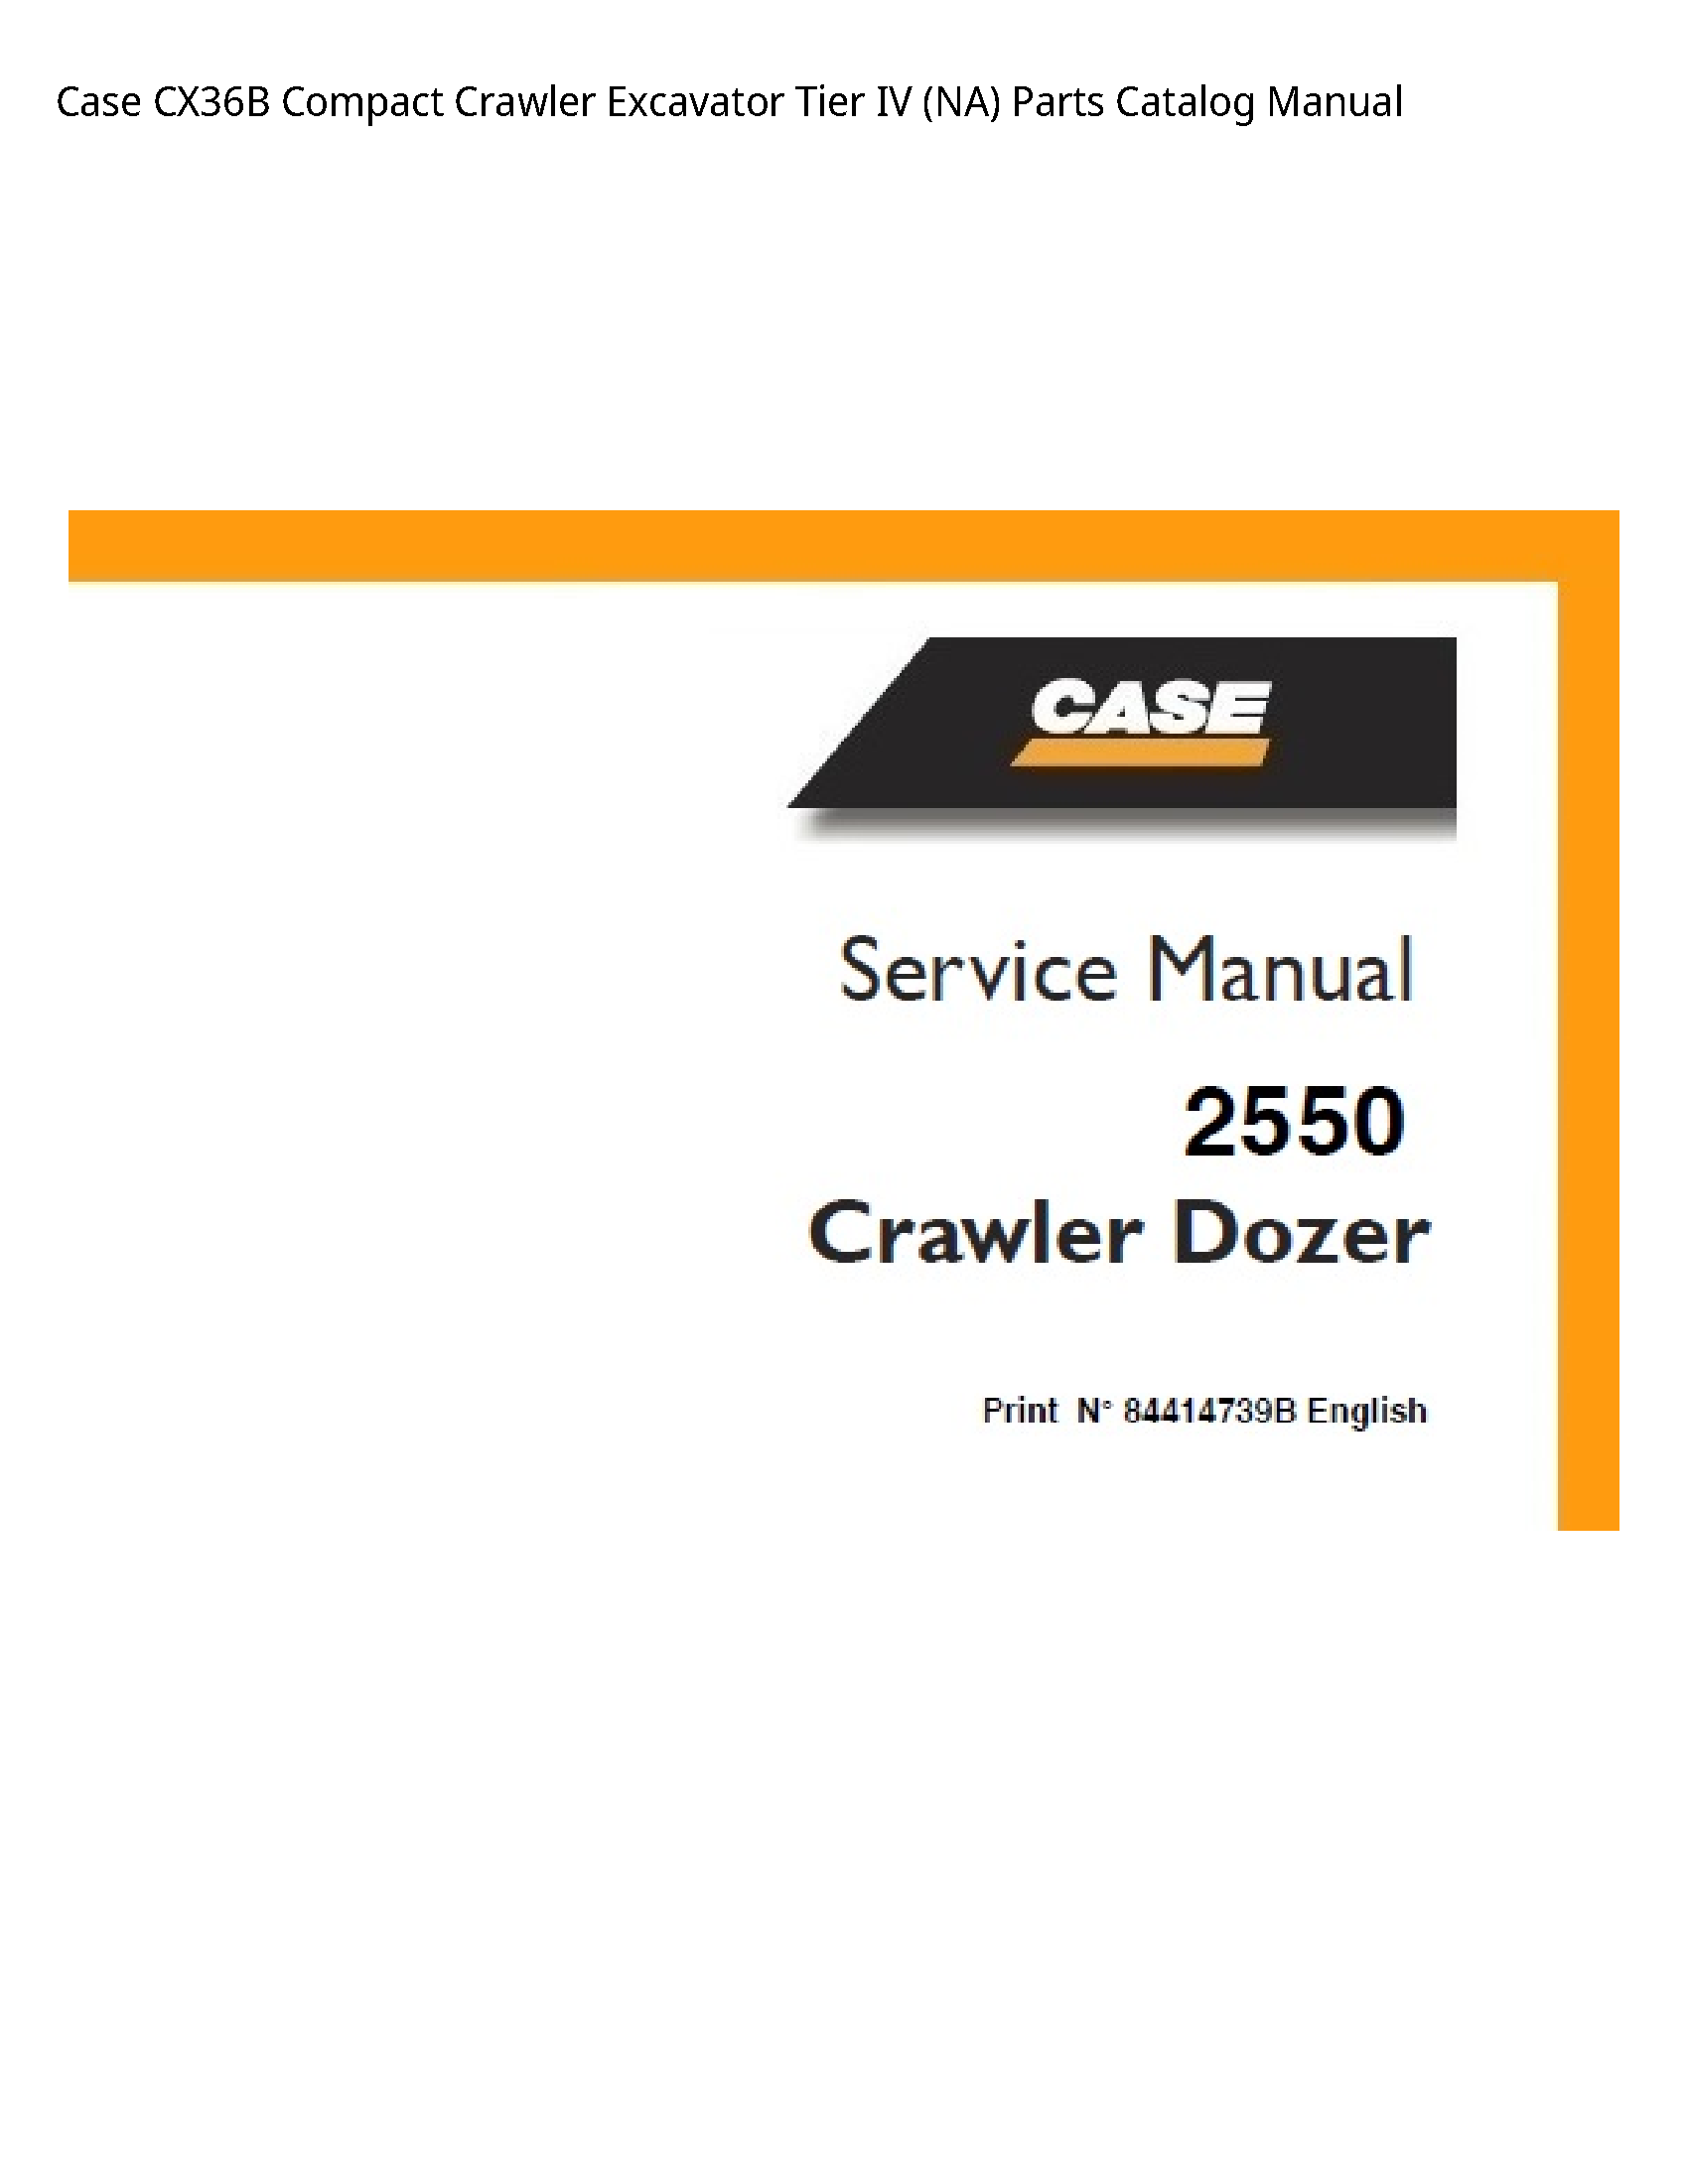 Case/Case IH CX36B Compact Crawler Excavator Tier IV (NA) Parts Catalog manual